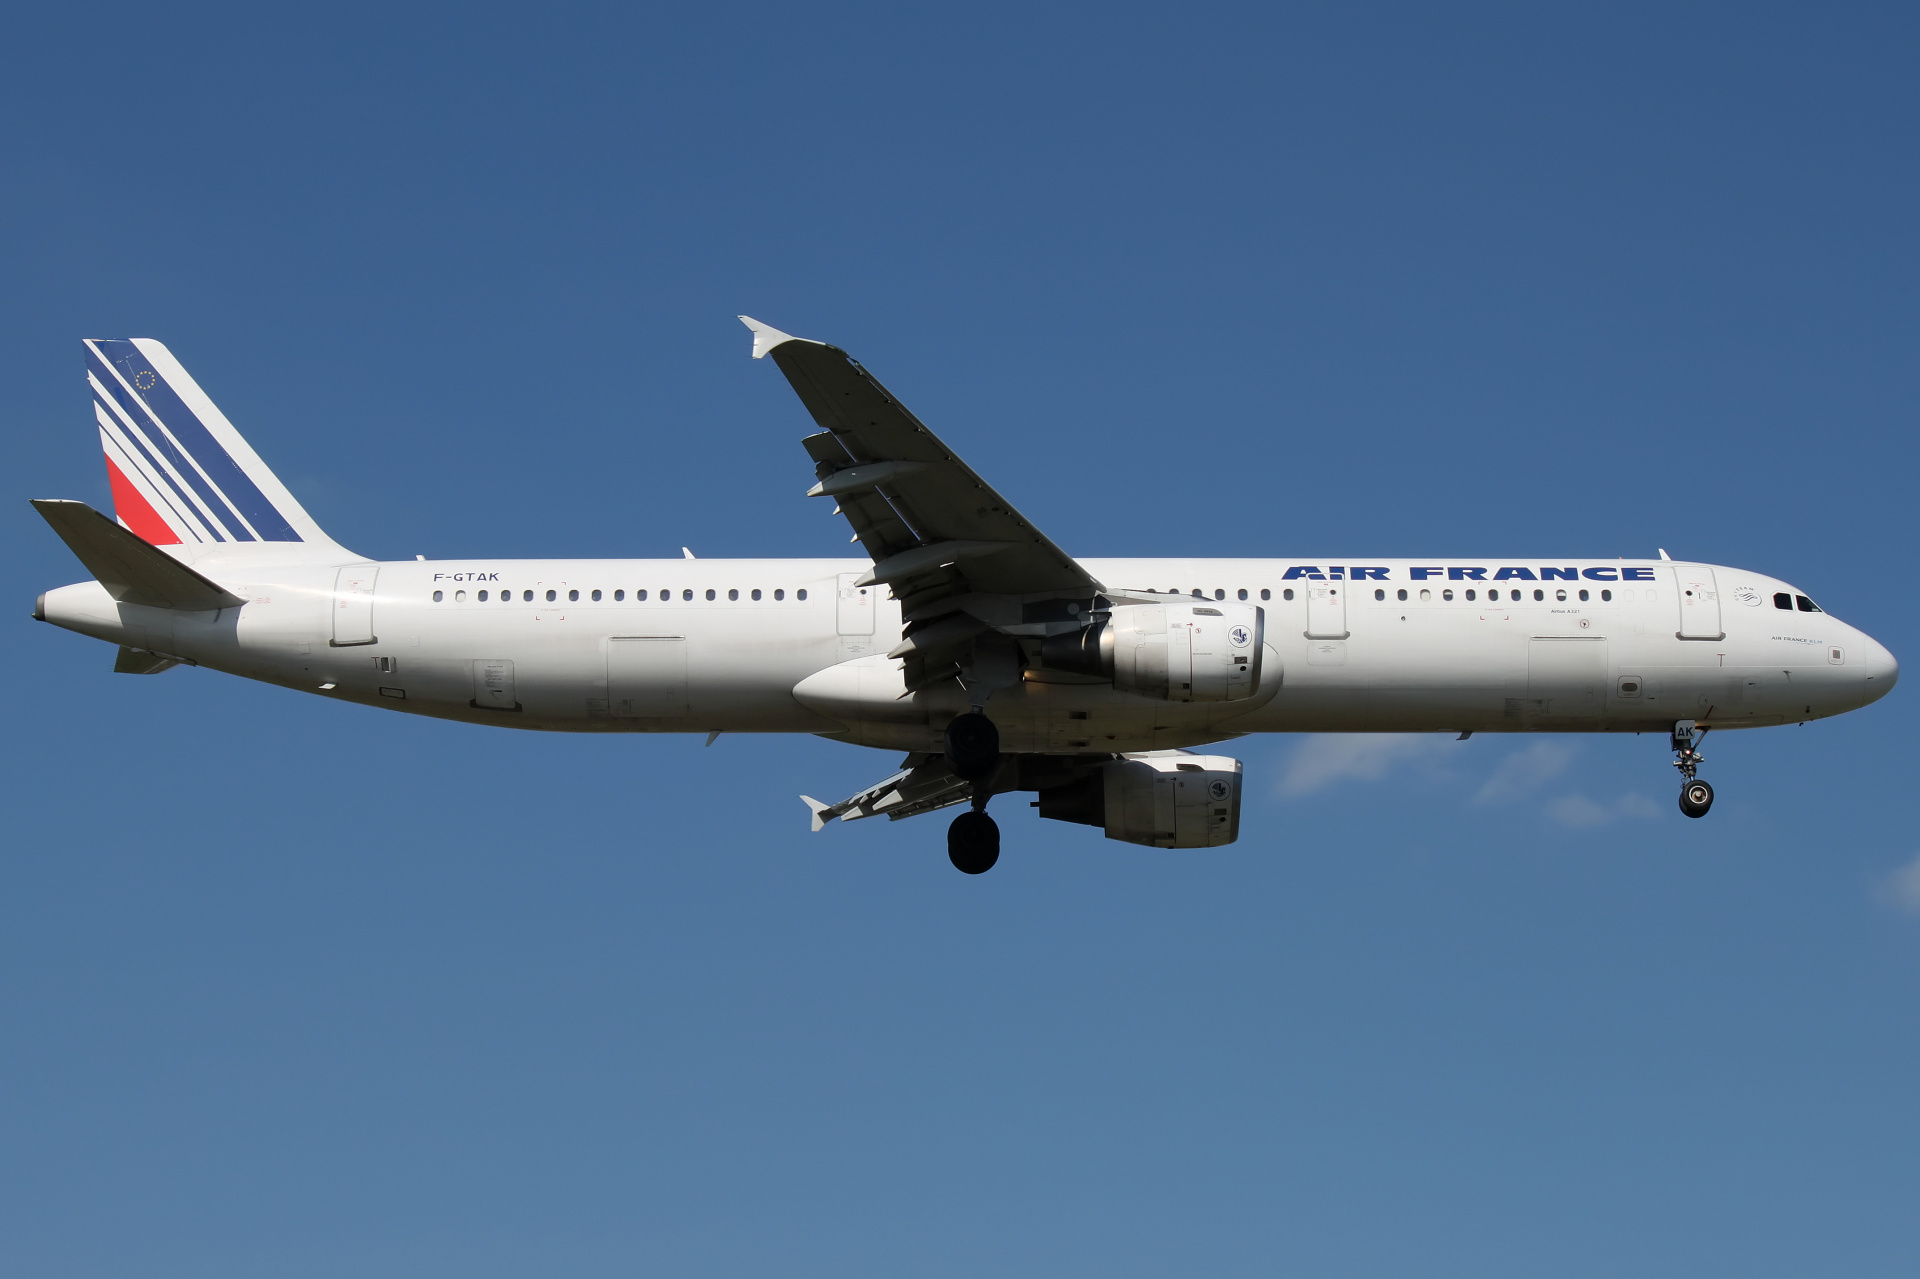 F-GTAK, Air France (Aircraft » EPWA Spotting » Airbus A321-200)